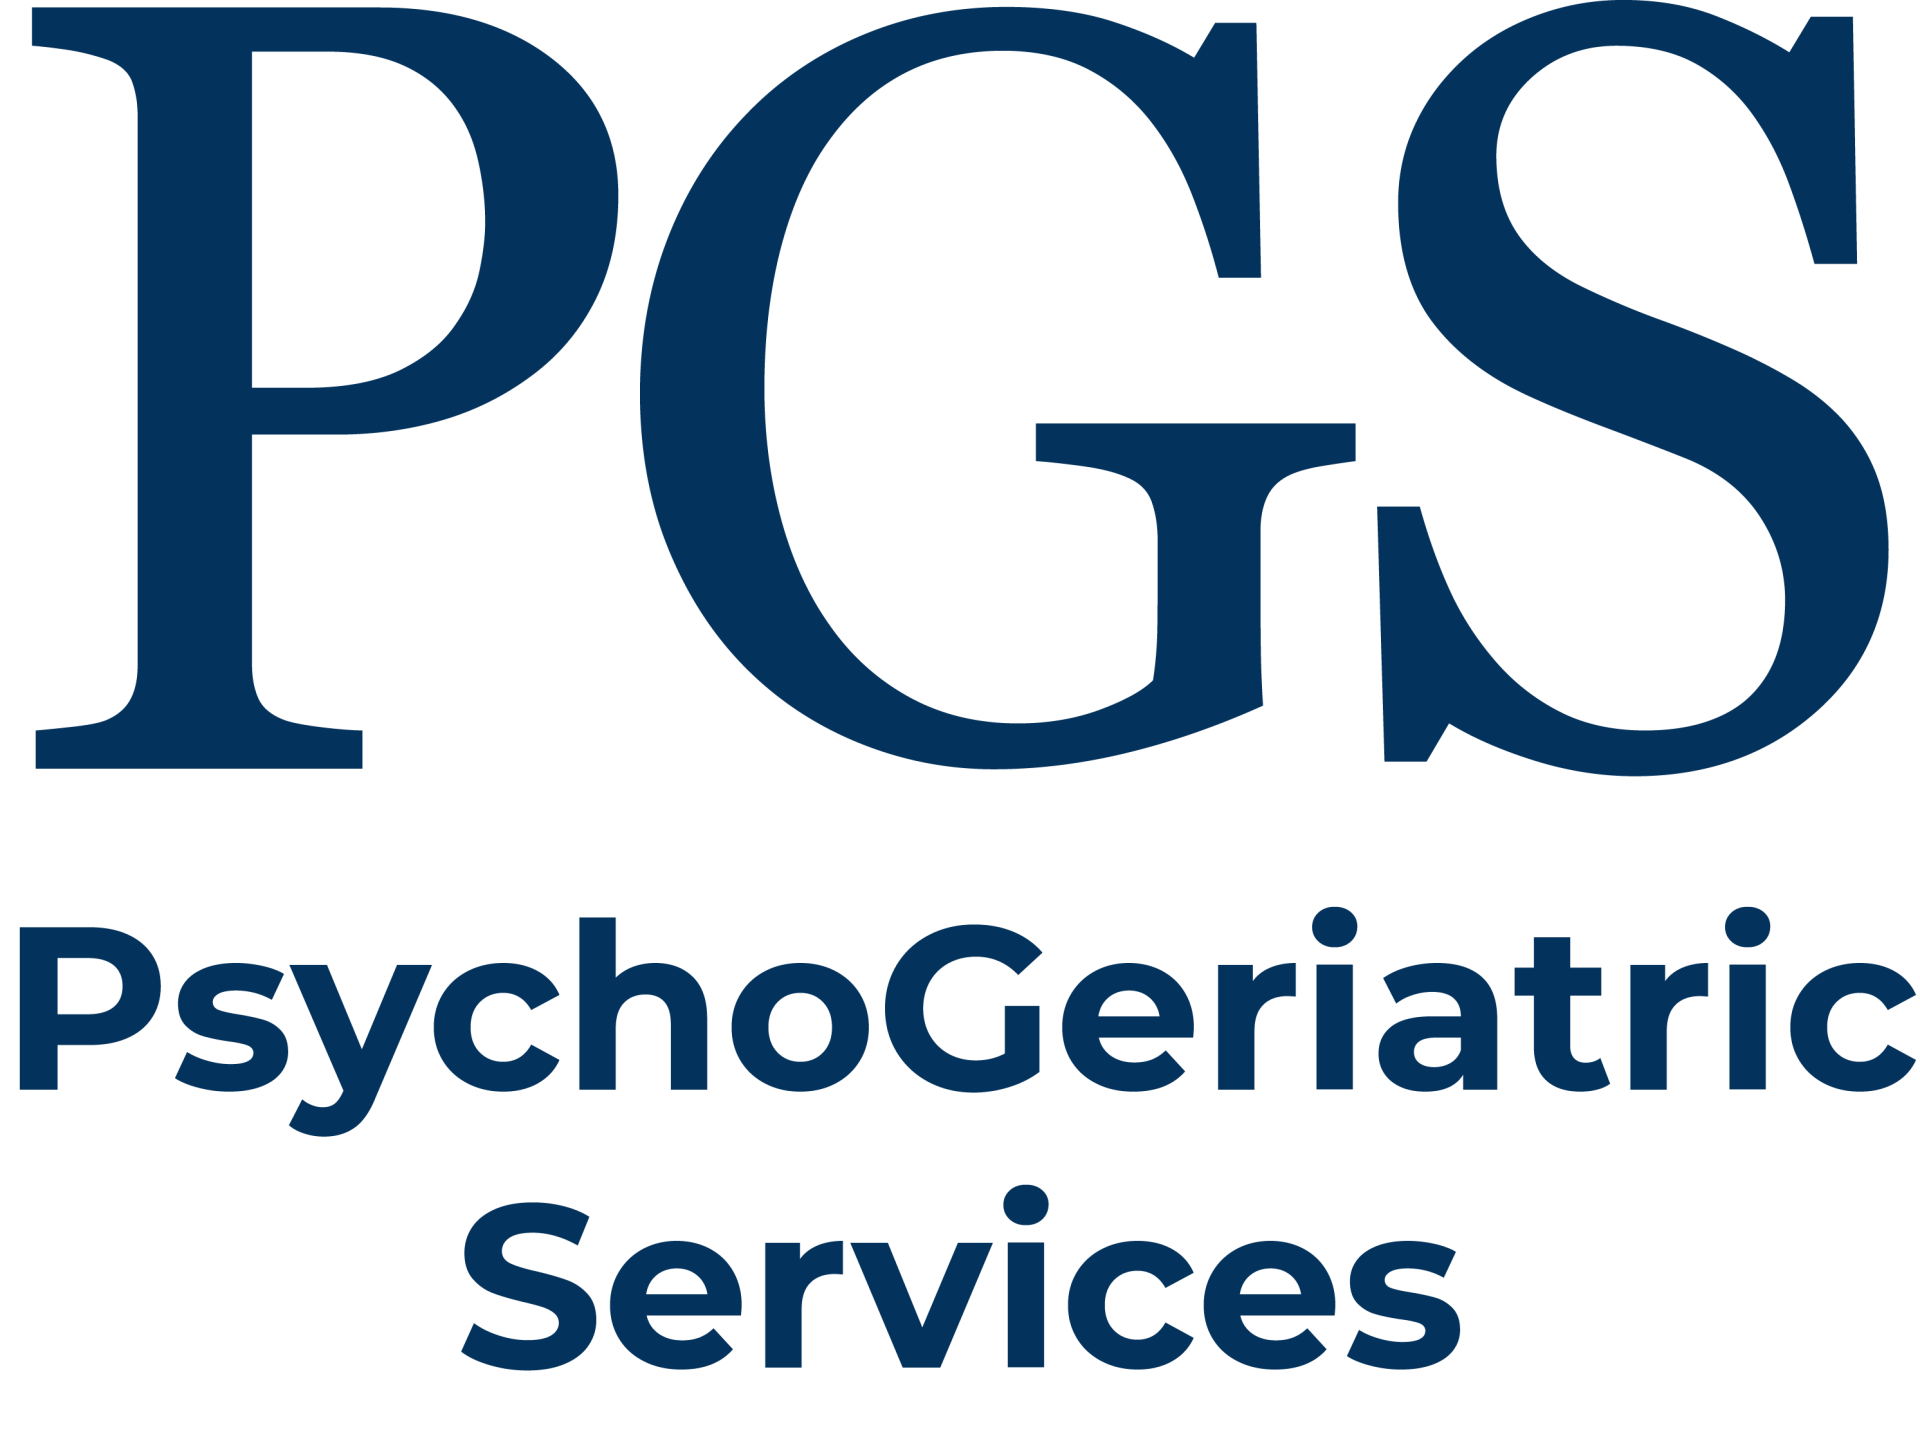 PsychoGeriatric Services PGS